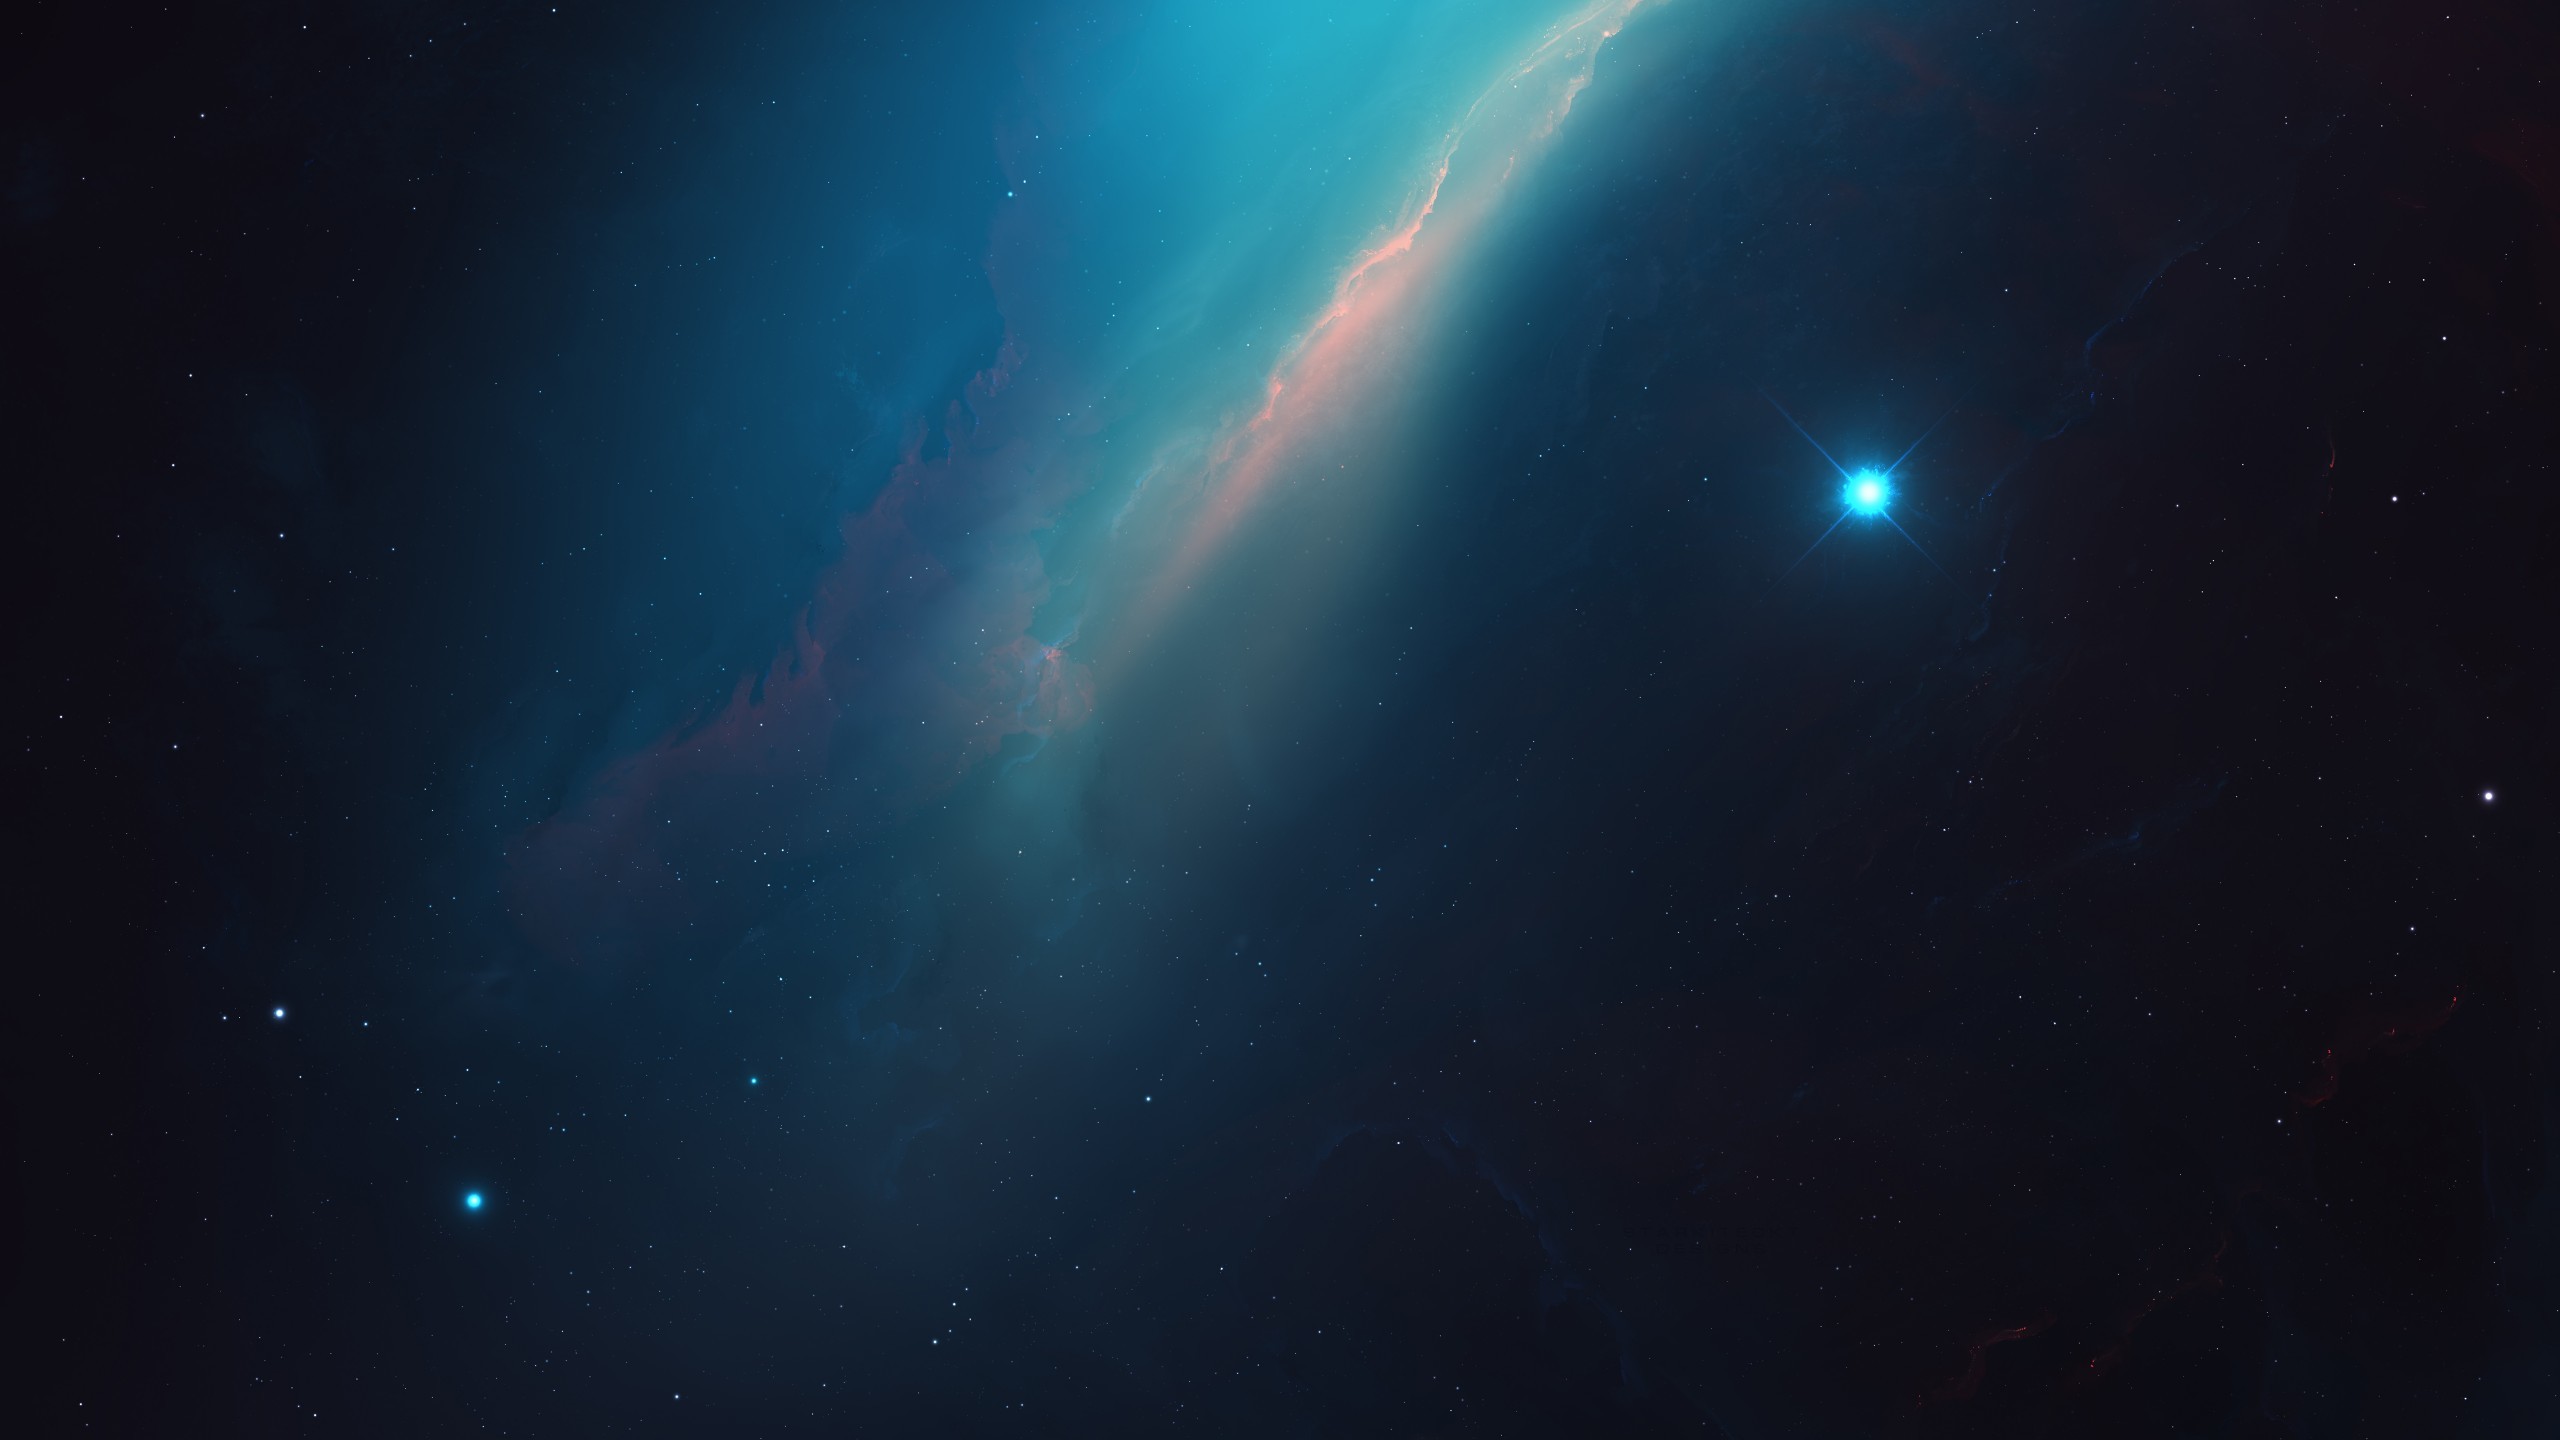 Space / Interstellar Wallpaper